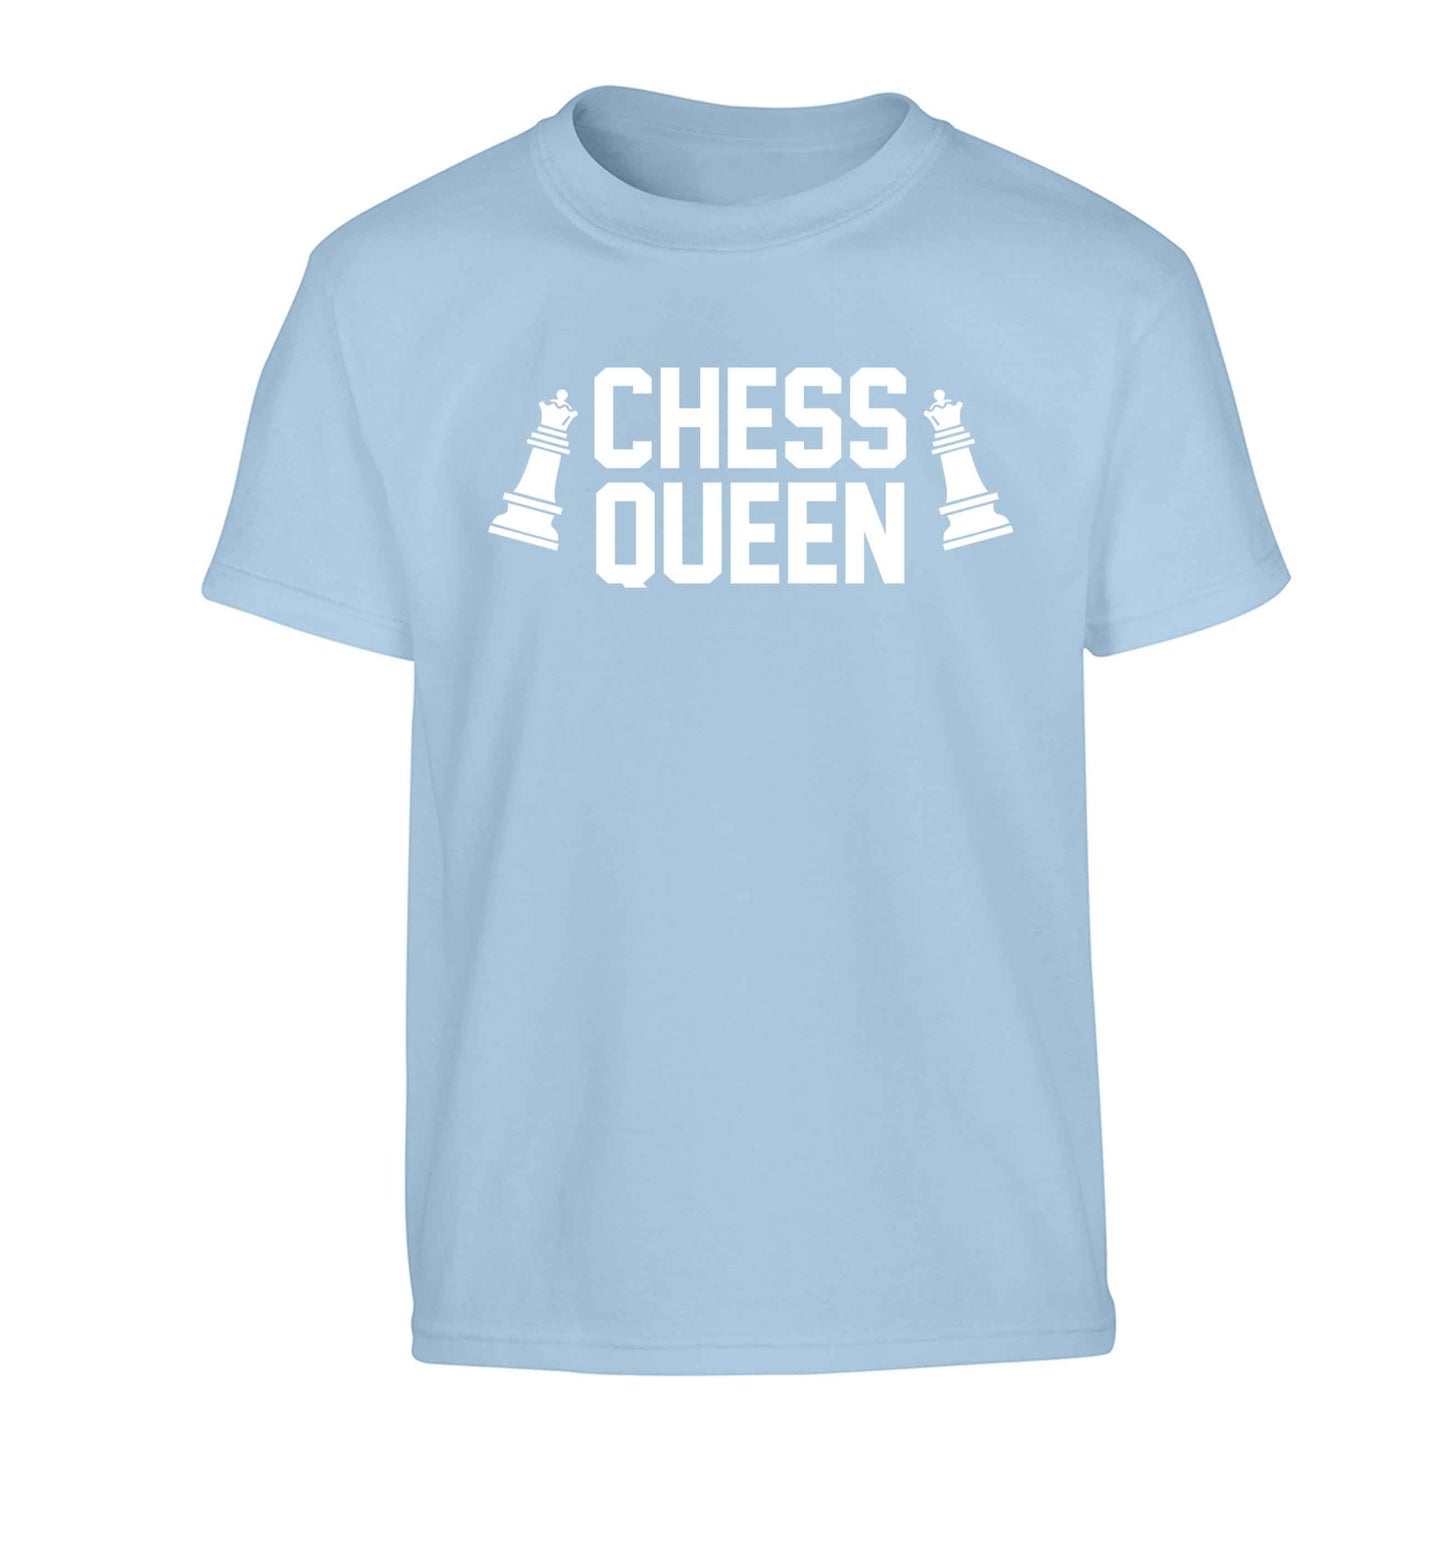 Chess queen Children's light blue Tshirt 12-13 Years